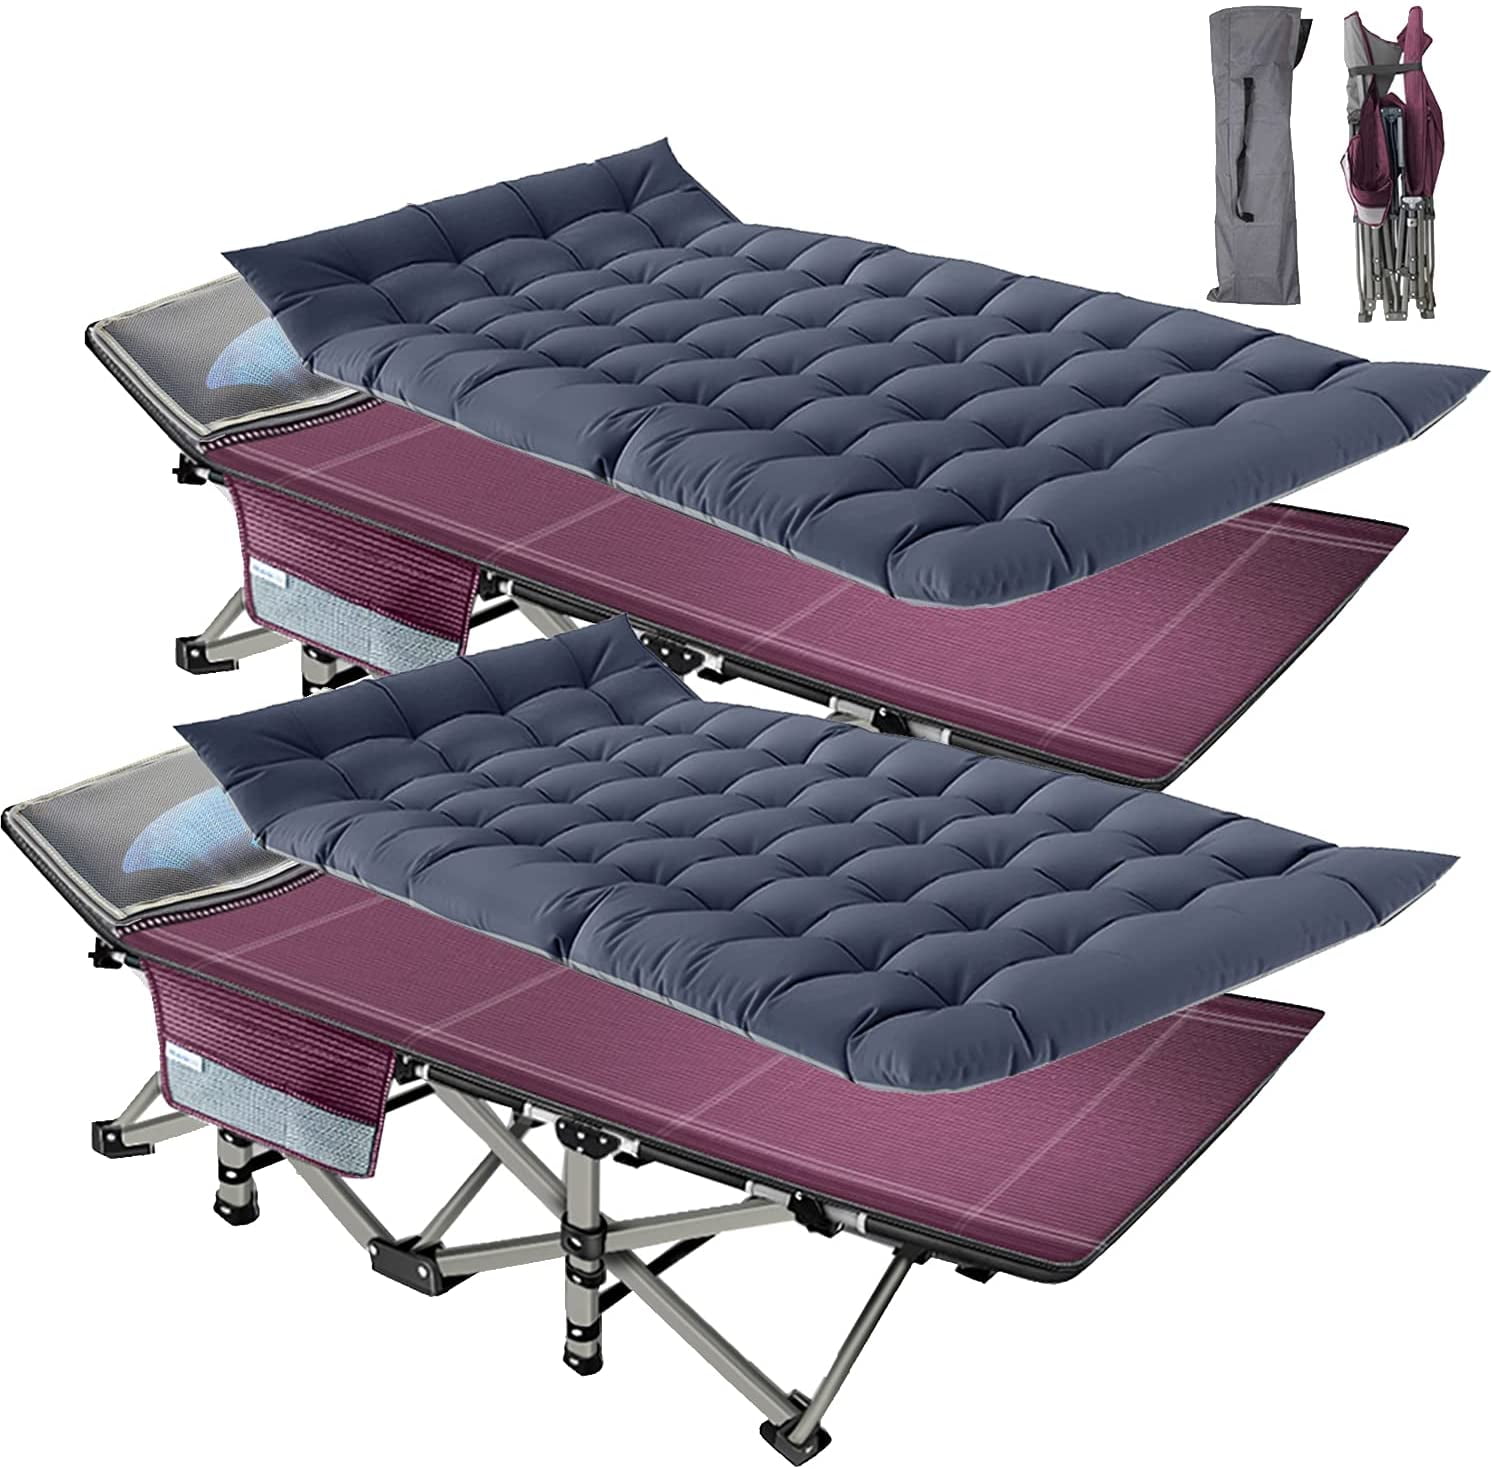 walmart travel cot mattress